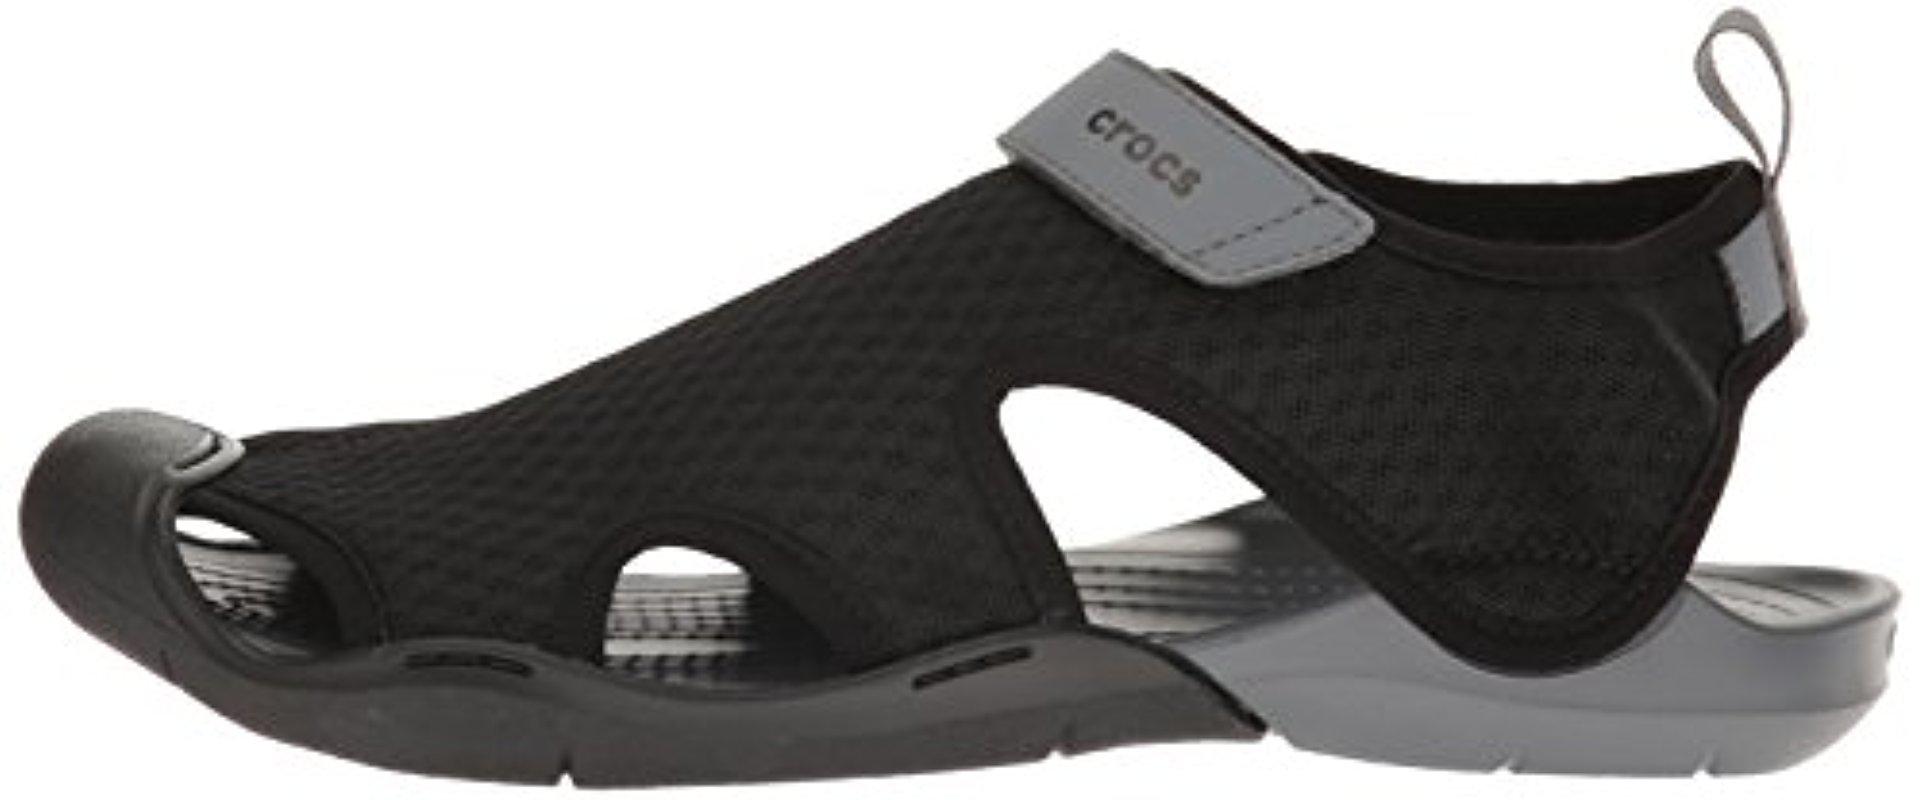 crocs swiftwater mesh sandals for ladies,(categoryid=107)Up to 78%  OFF,emregurses.com